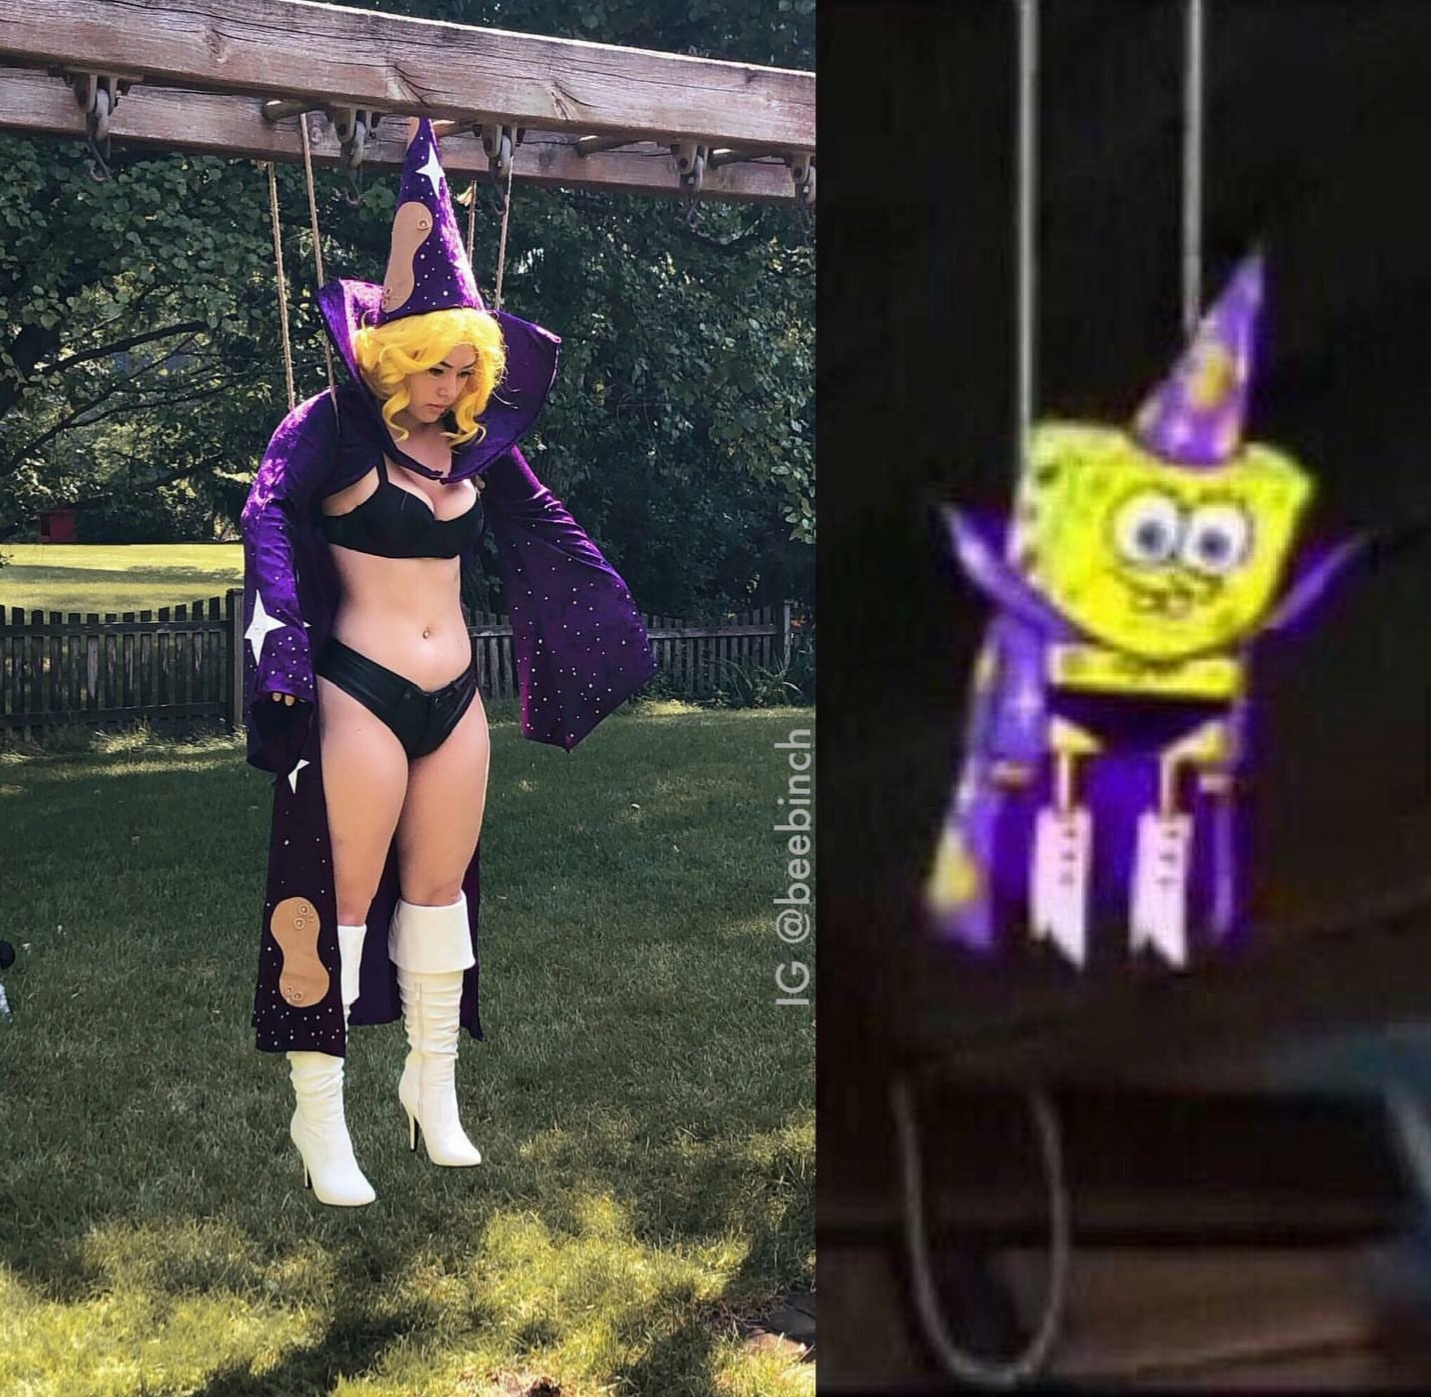 spongebob cosplay girl